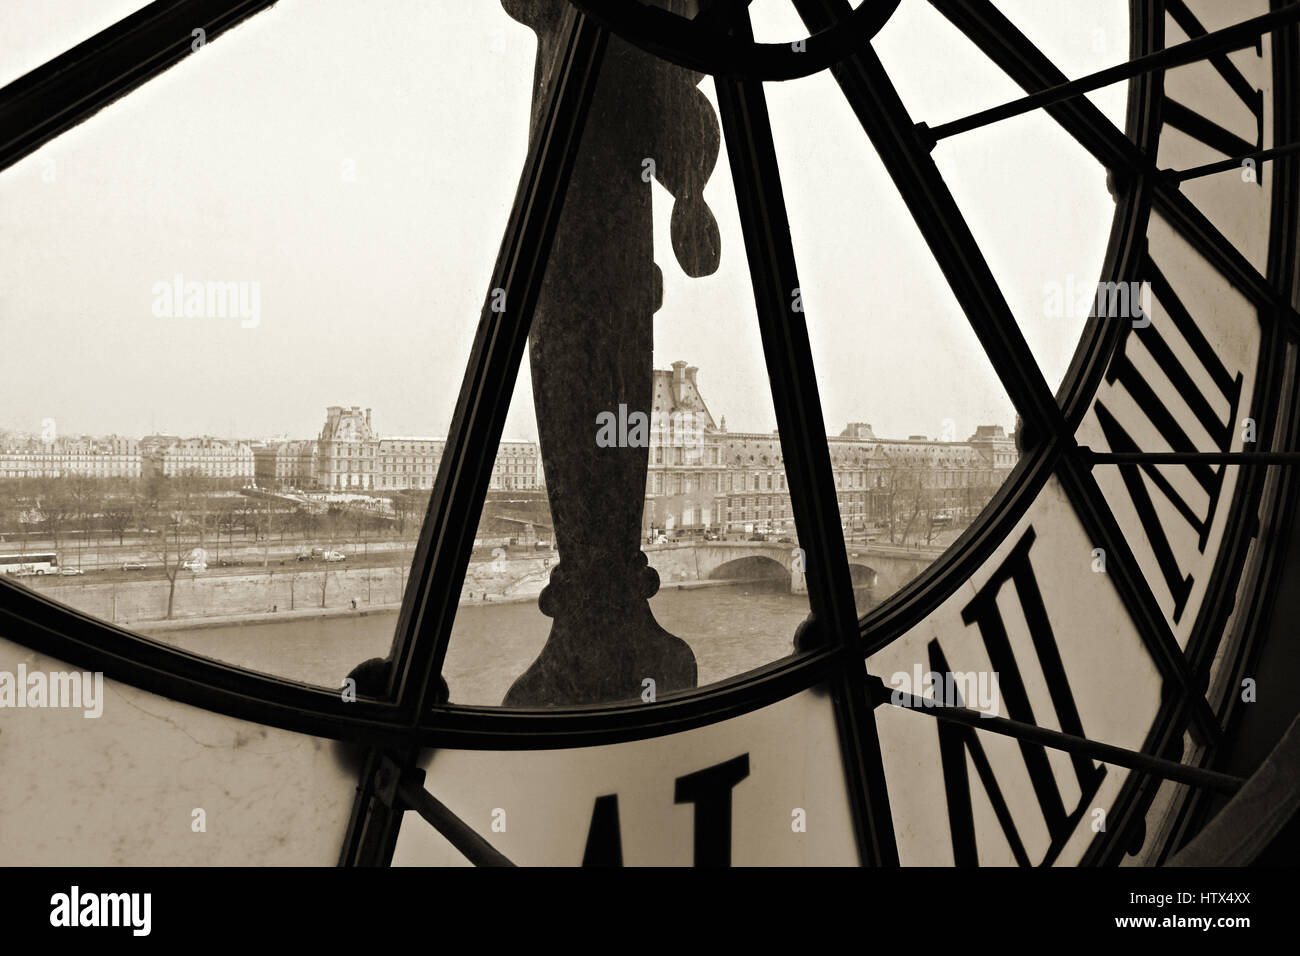 Clock in Orsay museum Paris, France Stock Photo